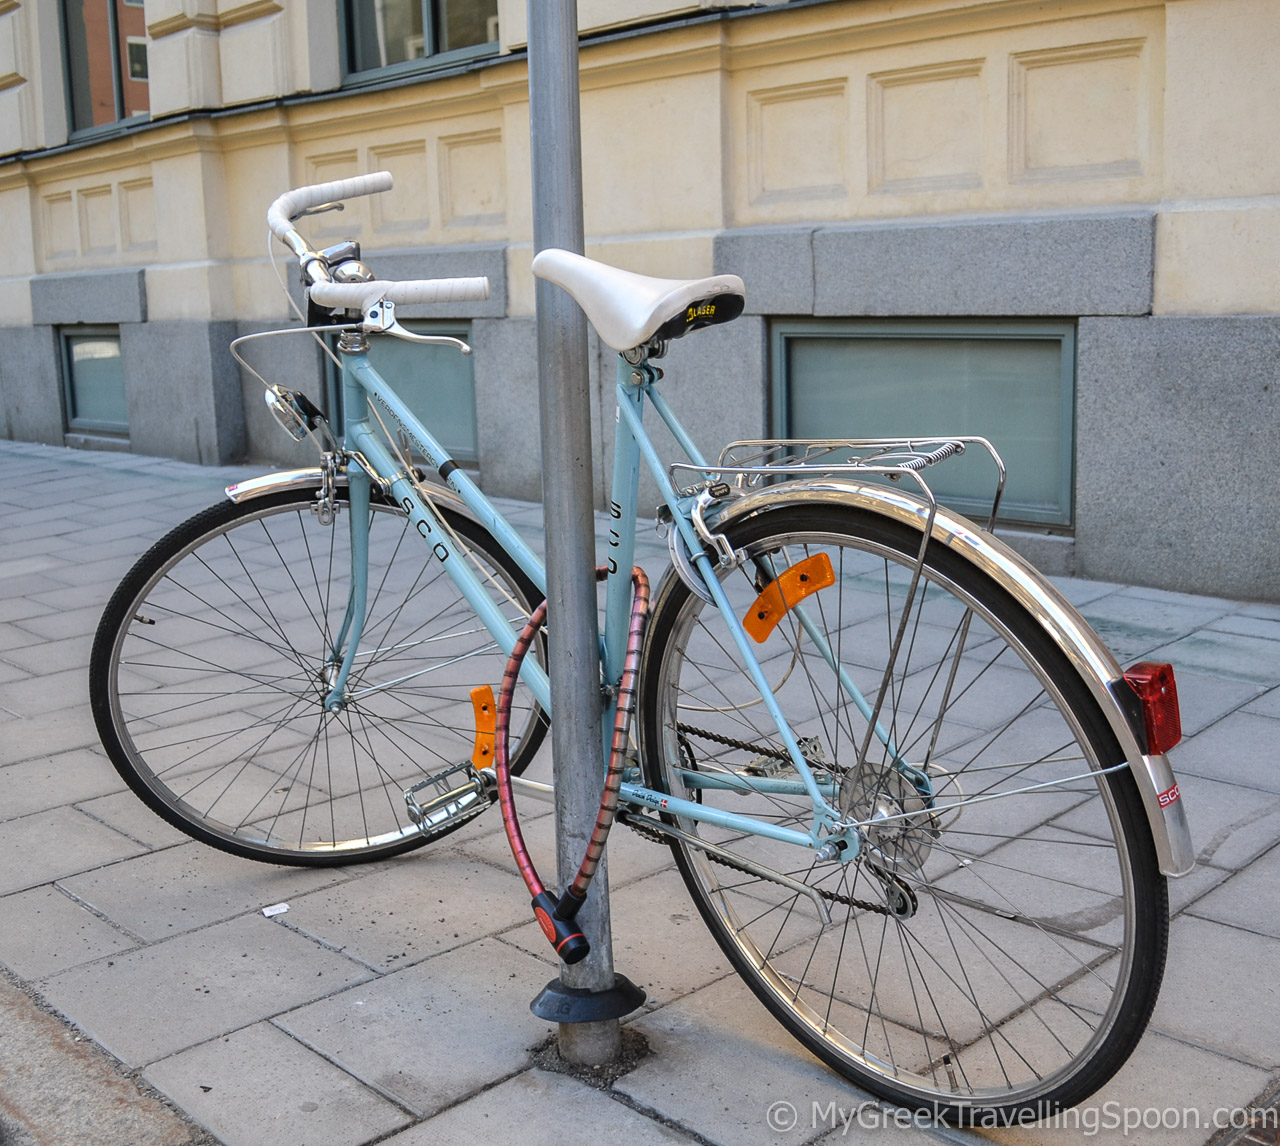 Stockholmers love their bikes!